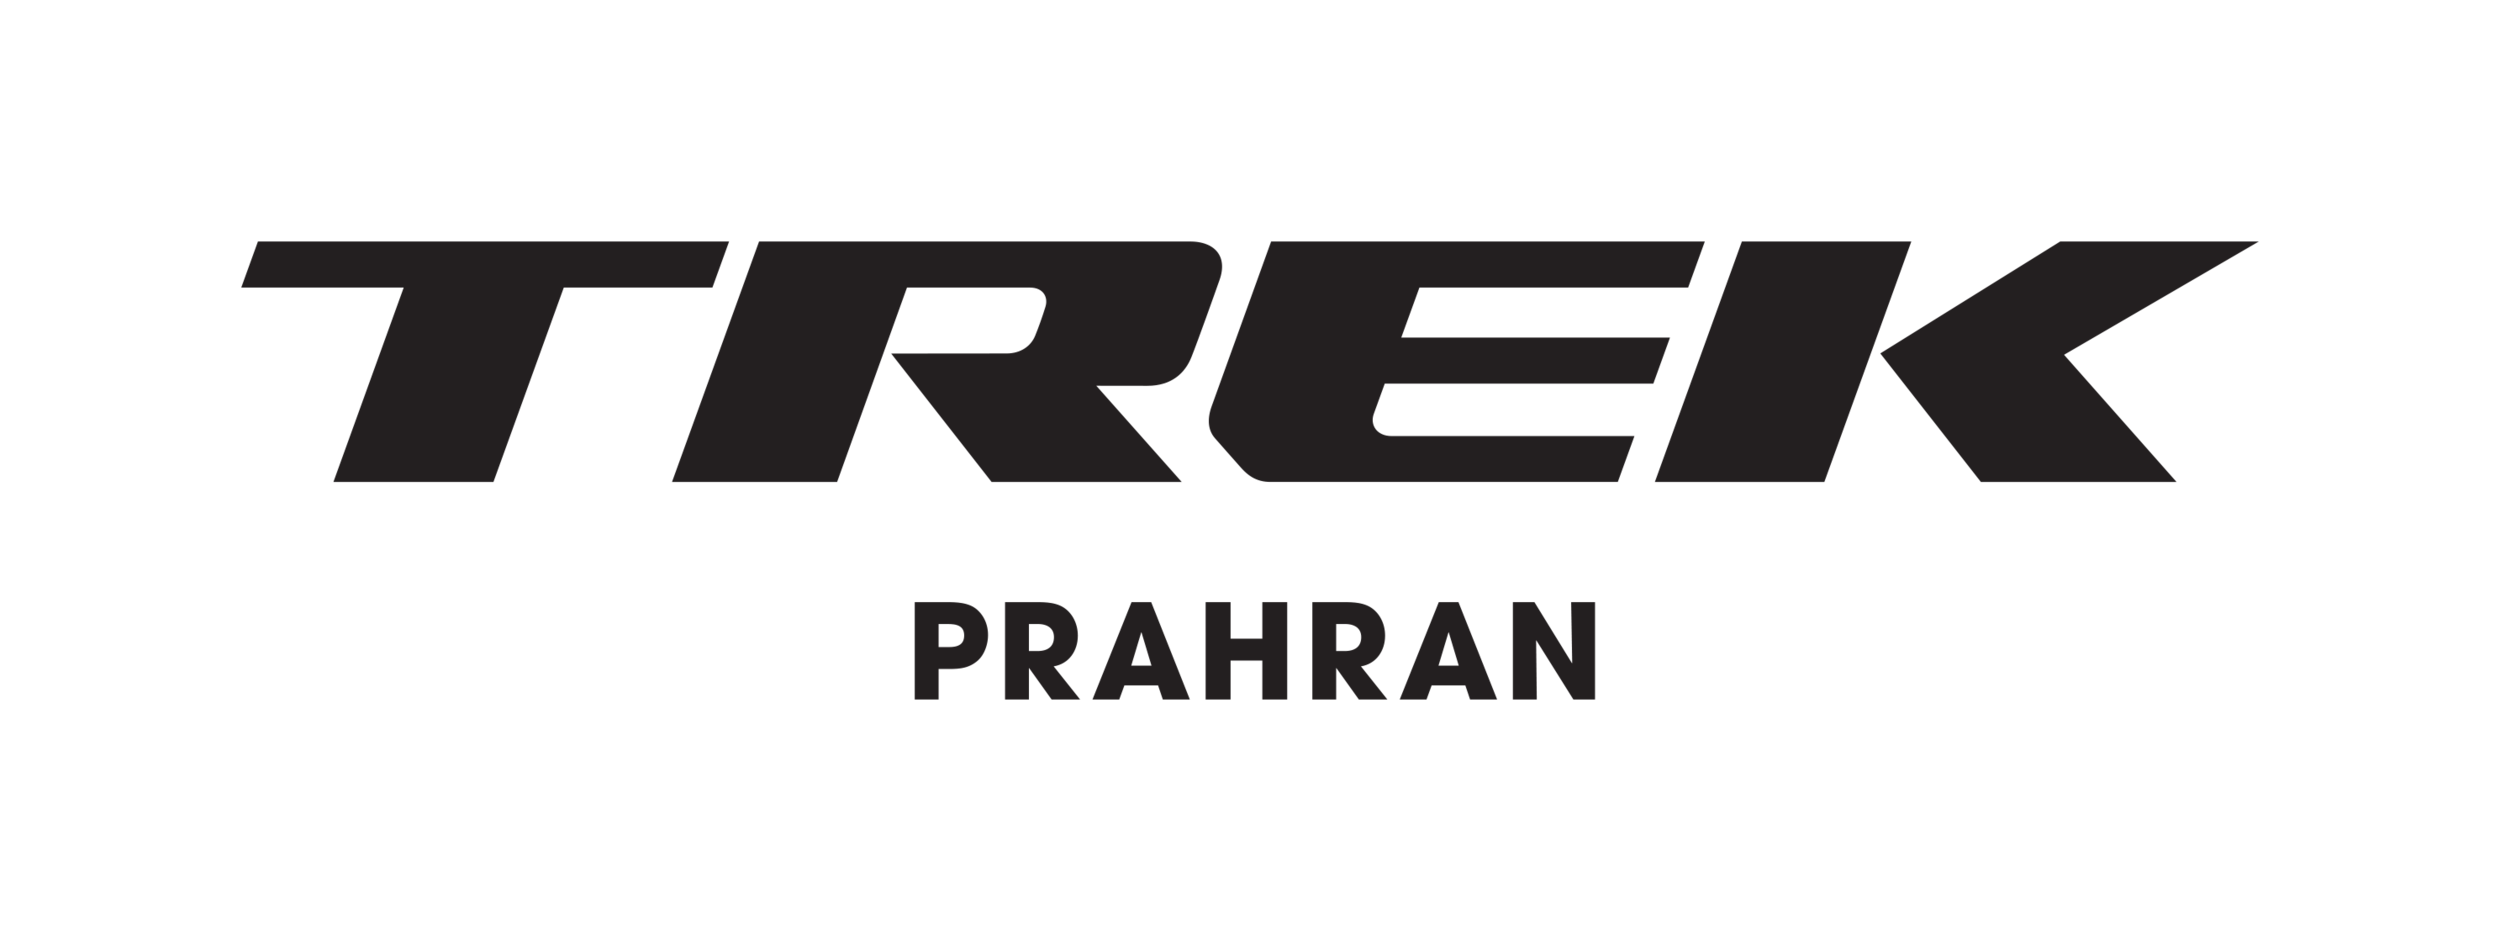 Trek Prahran.png